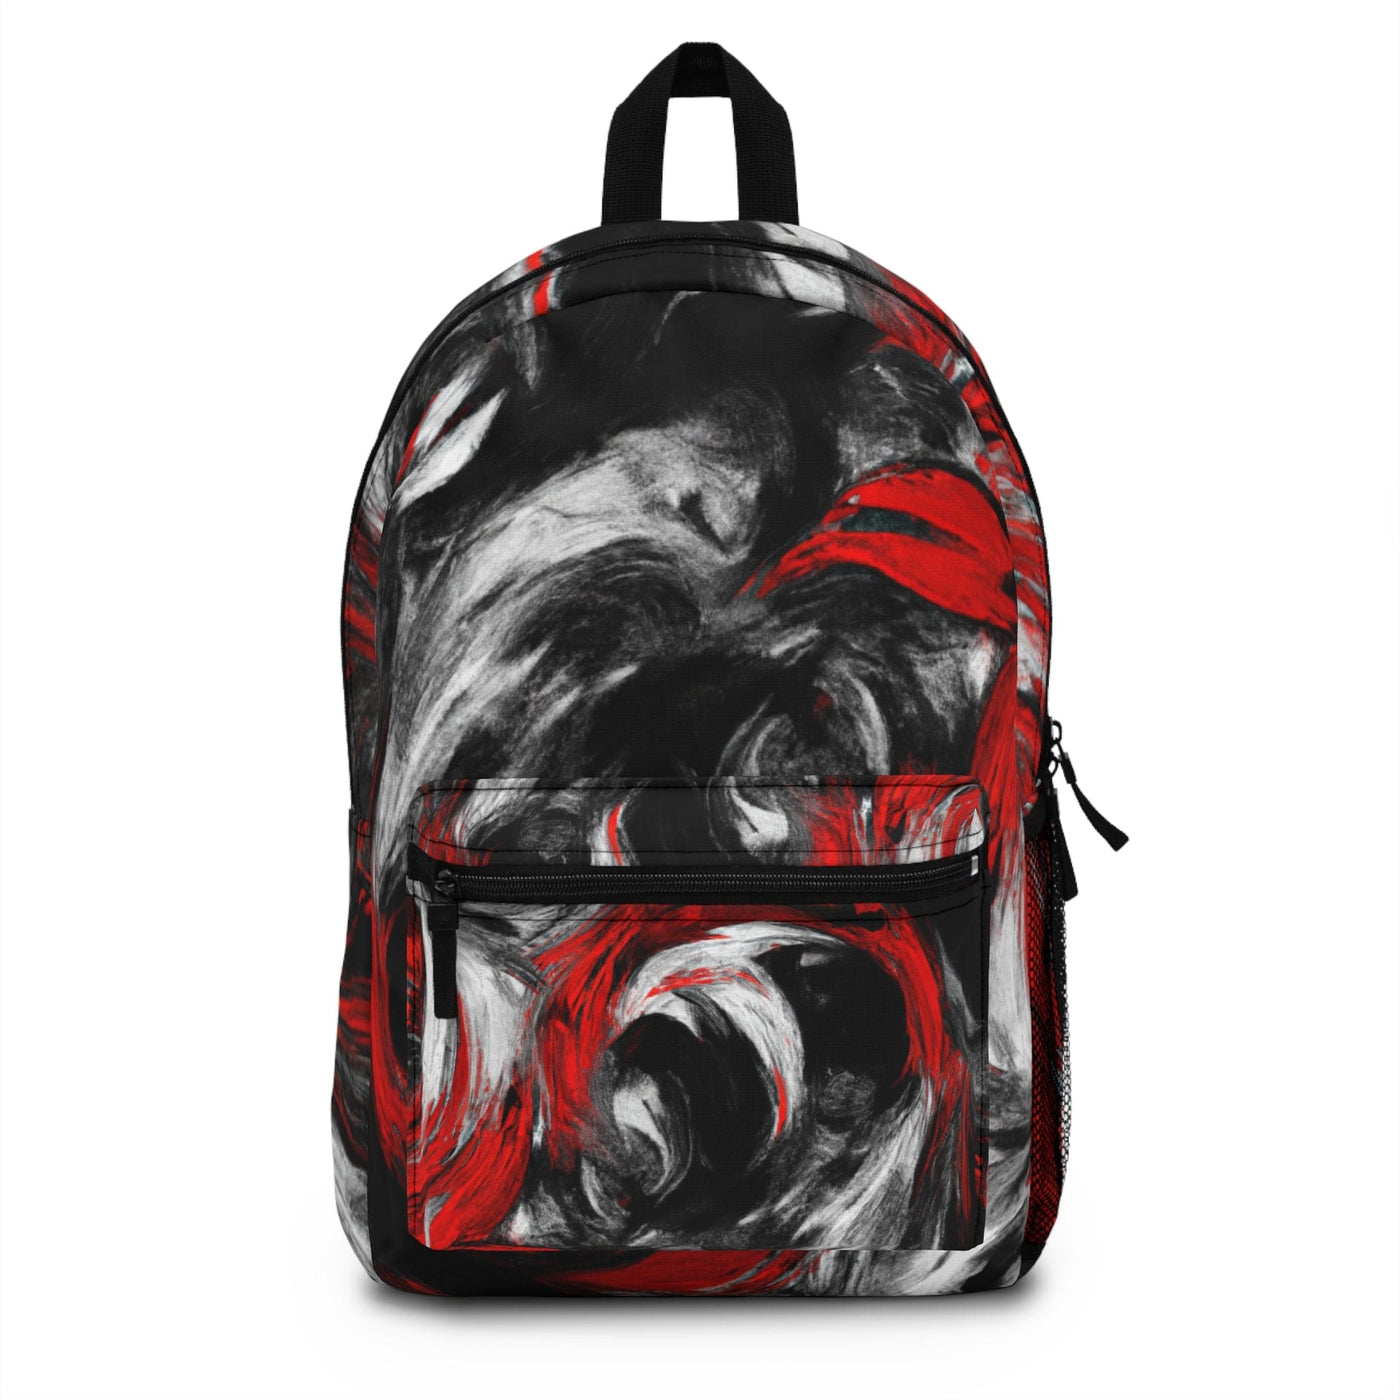 Backpack Work/school/leisure - Waterproof Decorative Black Red White Abstract